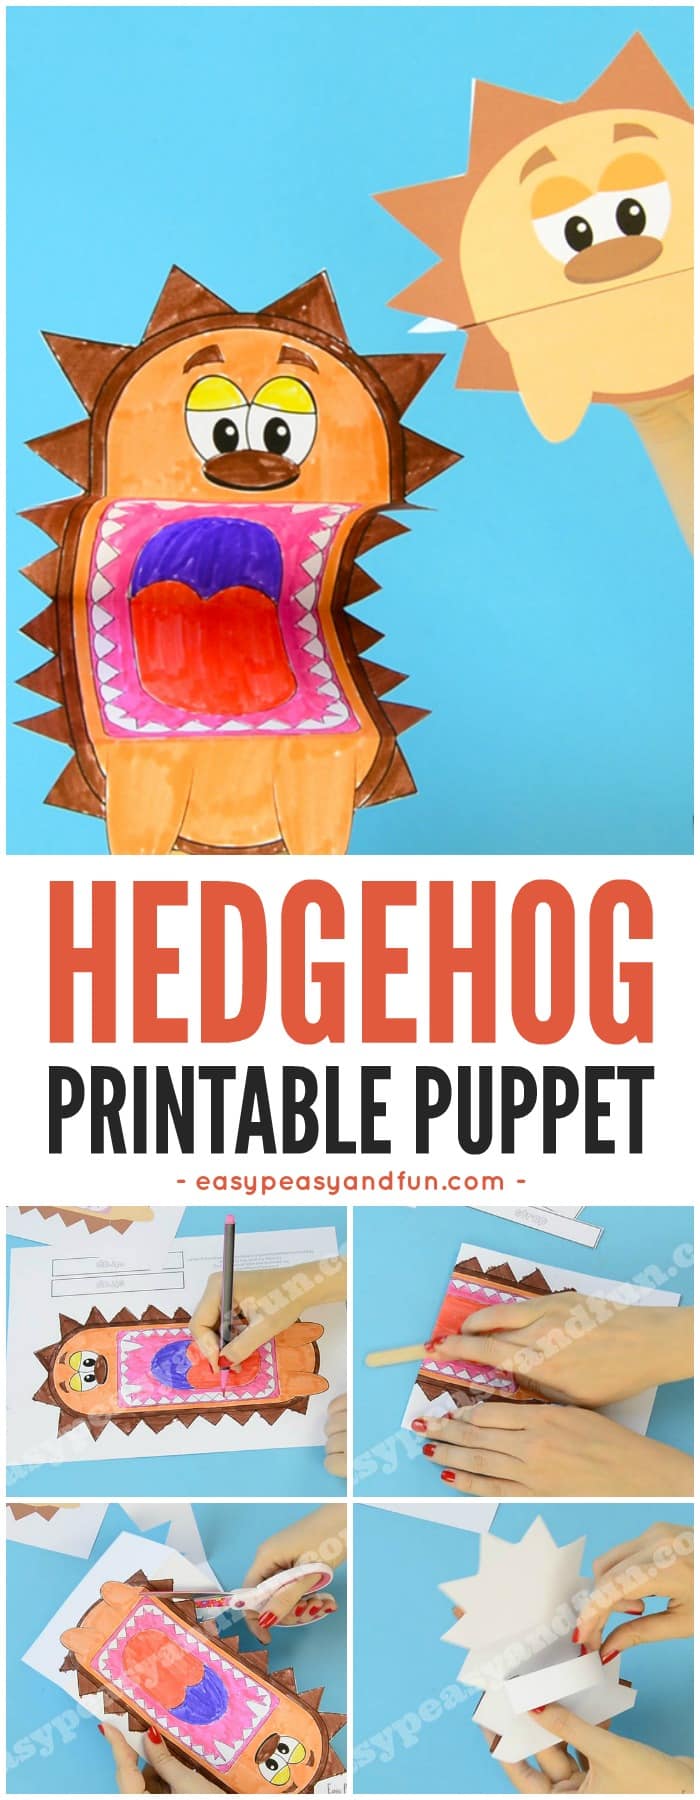 Children's printable hedgehog puppet template craft